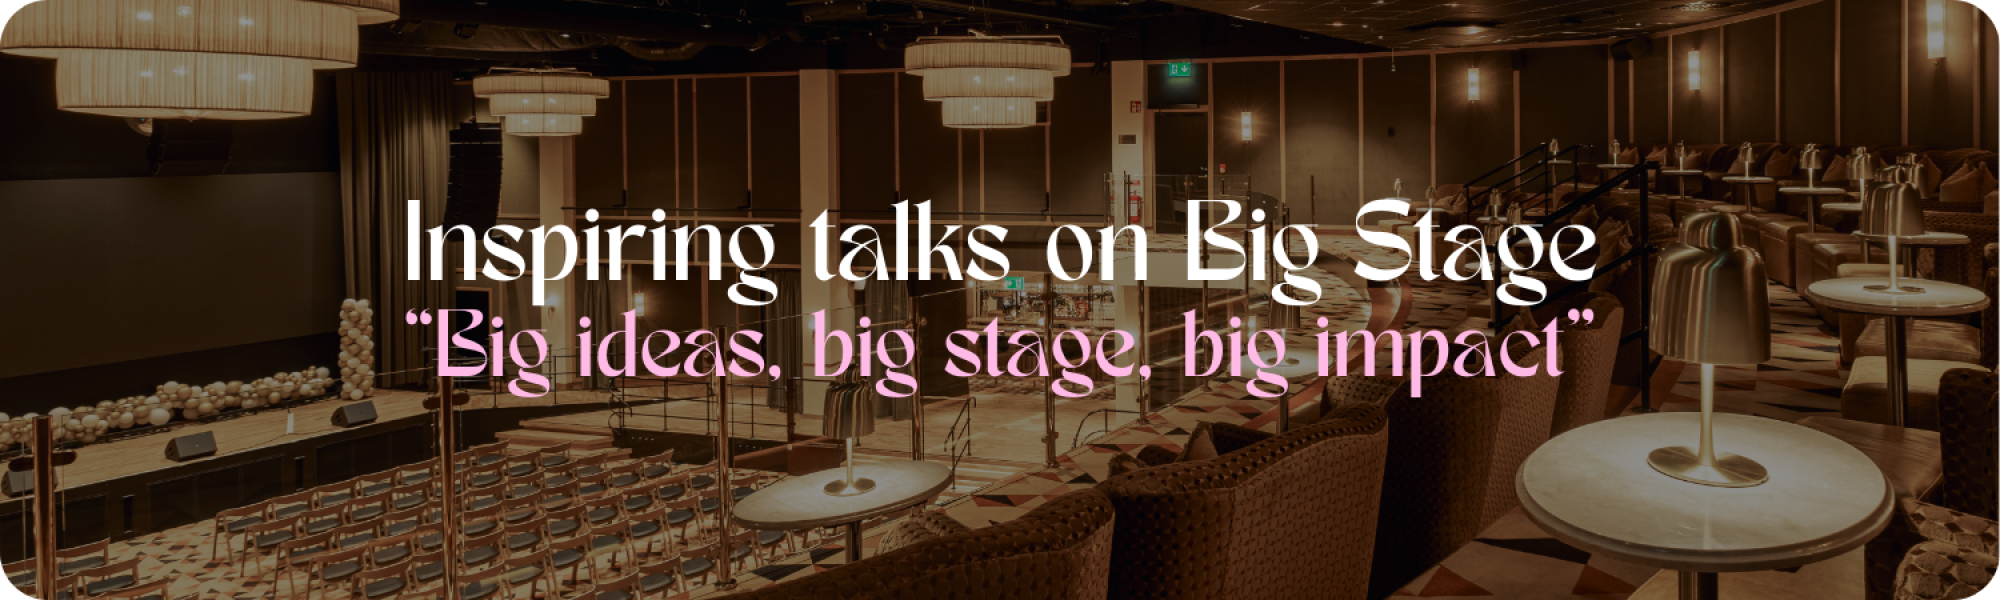 inspiring-talks-on-big-stage